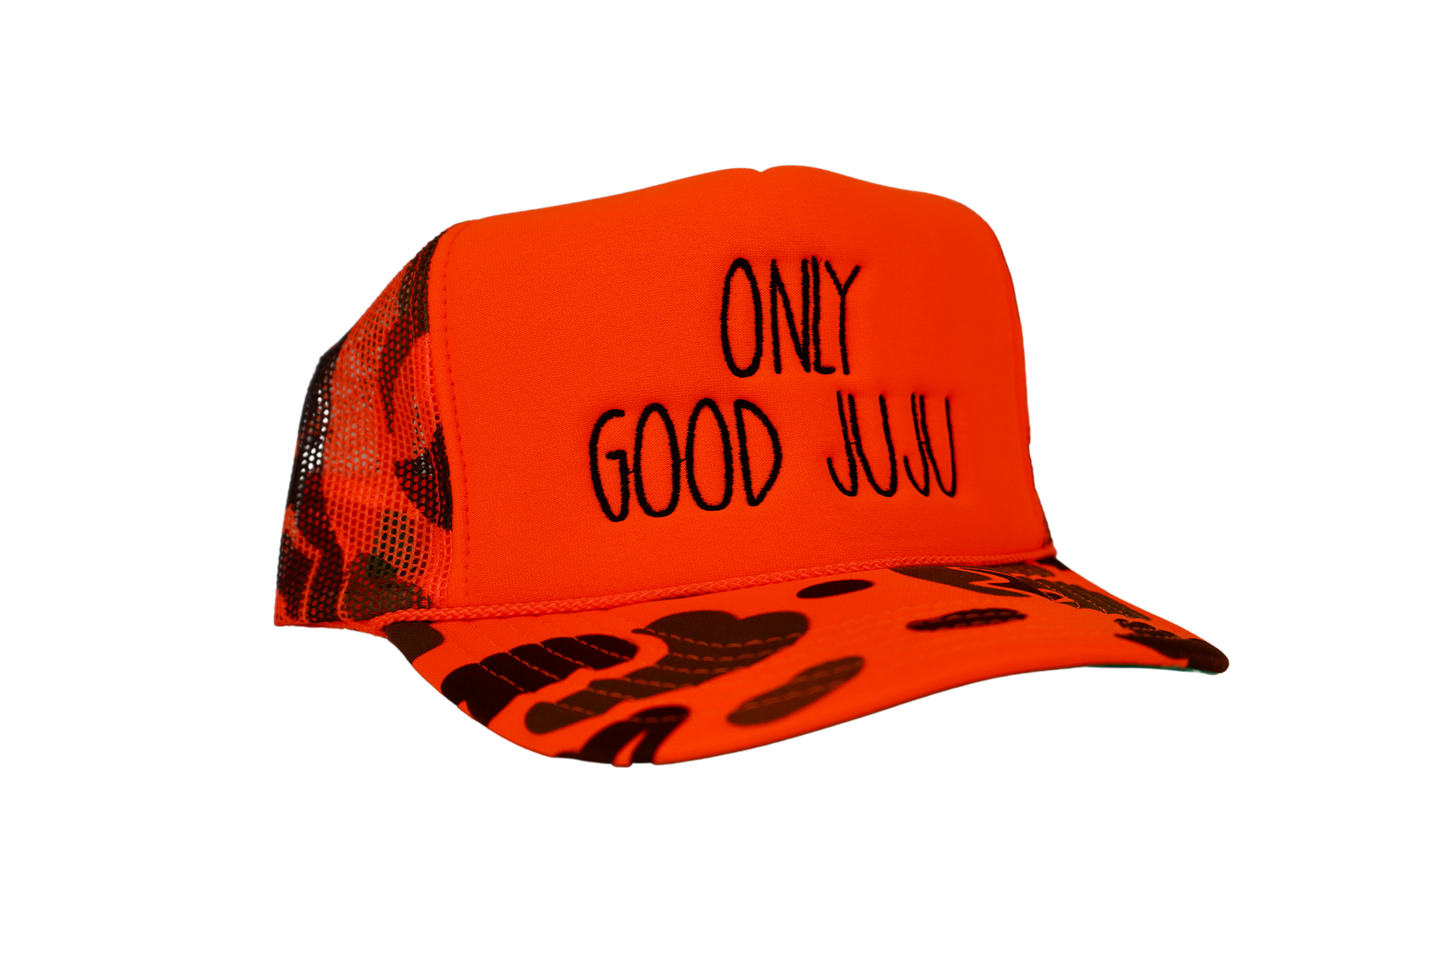 Only Good JuJu Embroidered Trucker Hat -Orange Camo